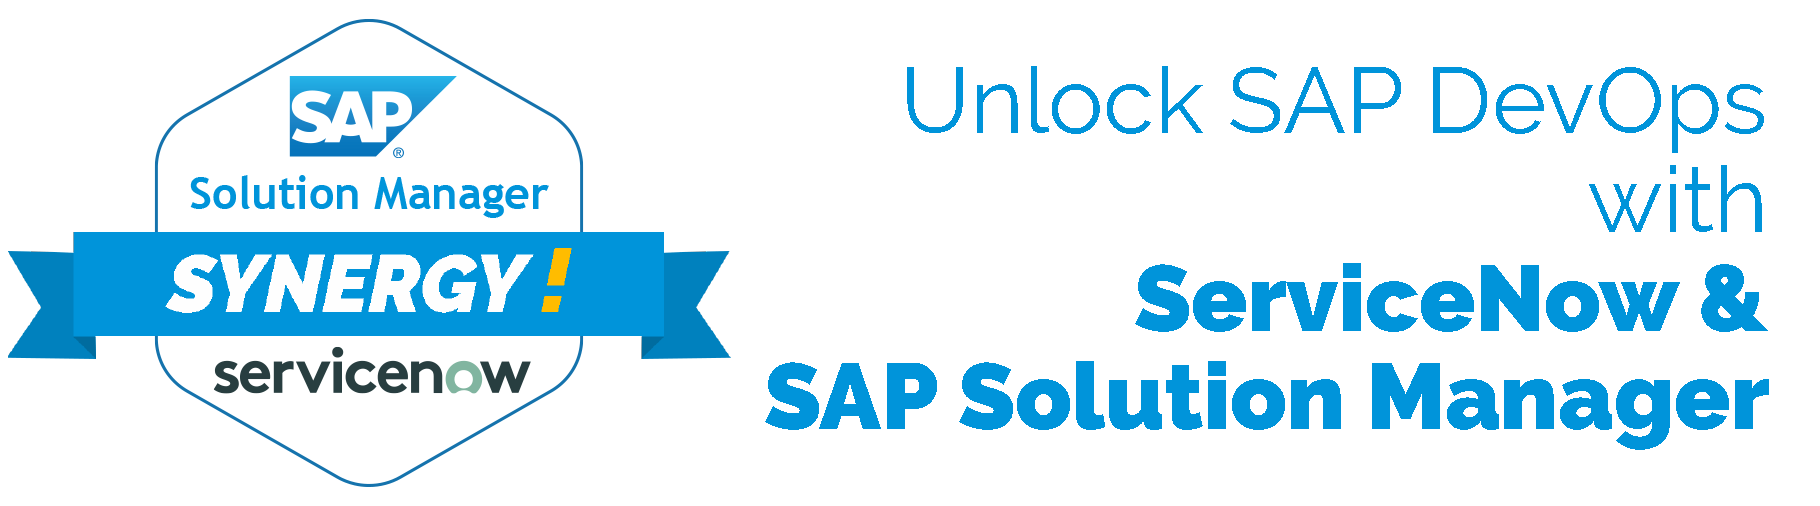 Unlock SAP DevOps